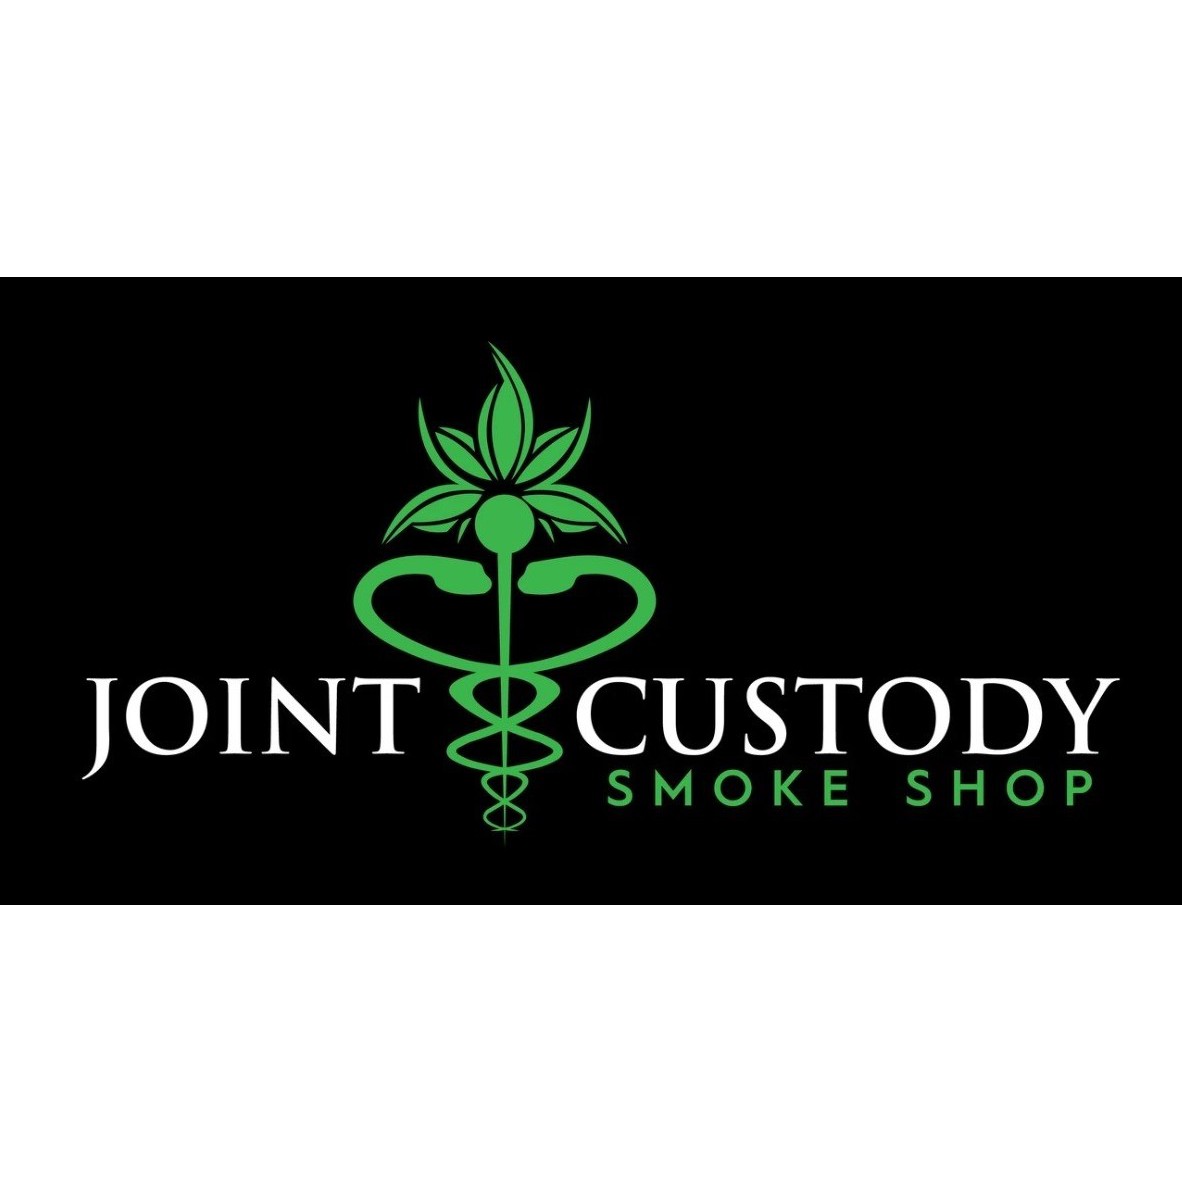 Joint Custody Smoke Shop - Houston, TX 77007 - (346)571-5154 | ShowMeLocal.com